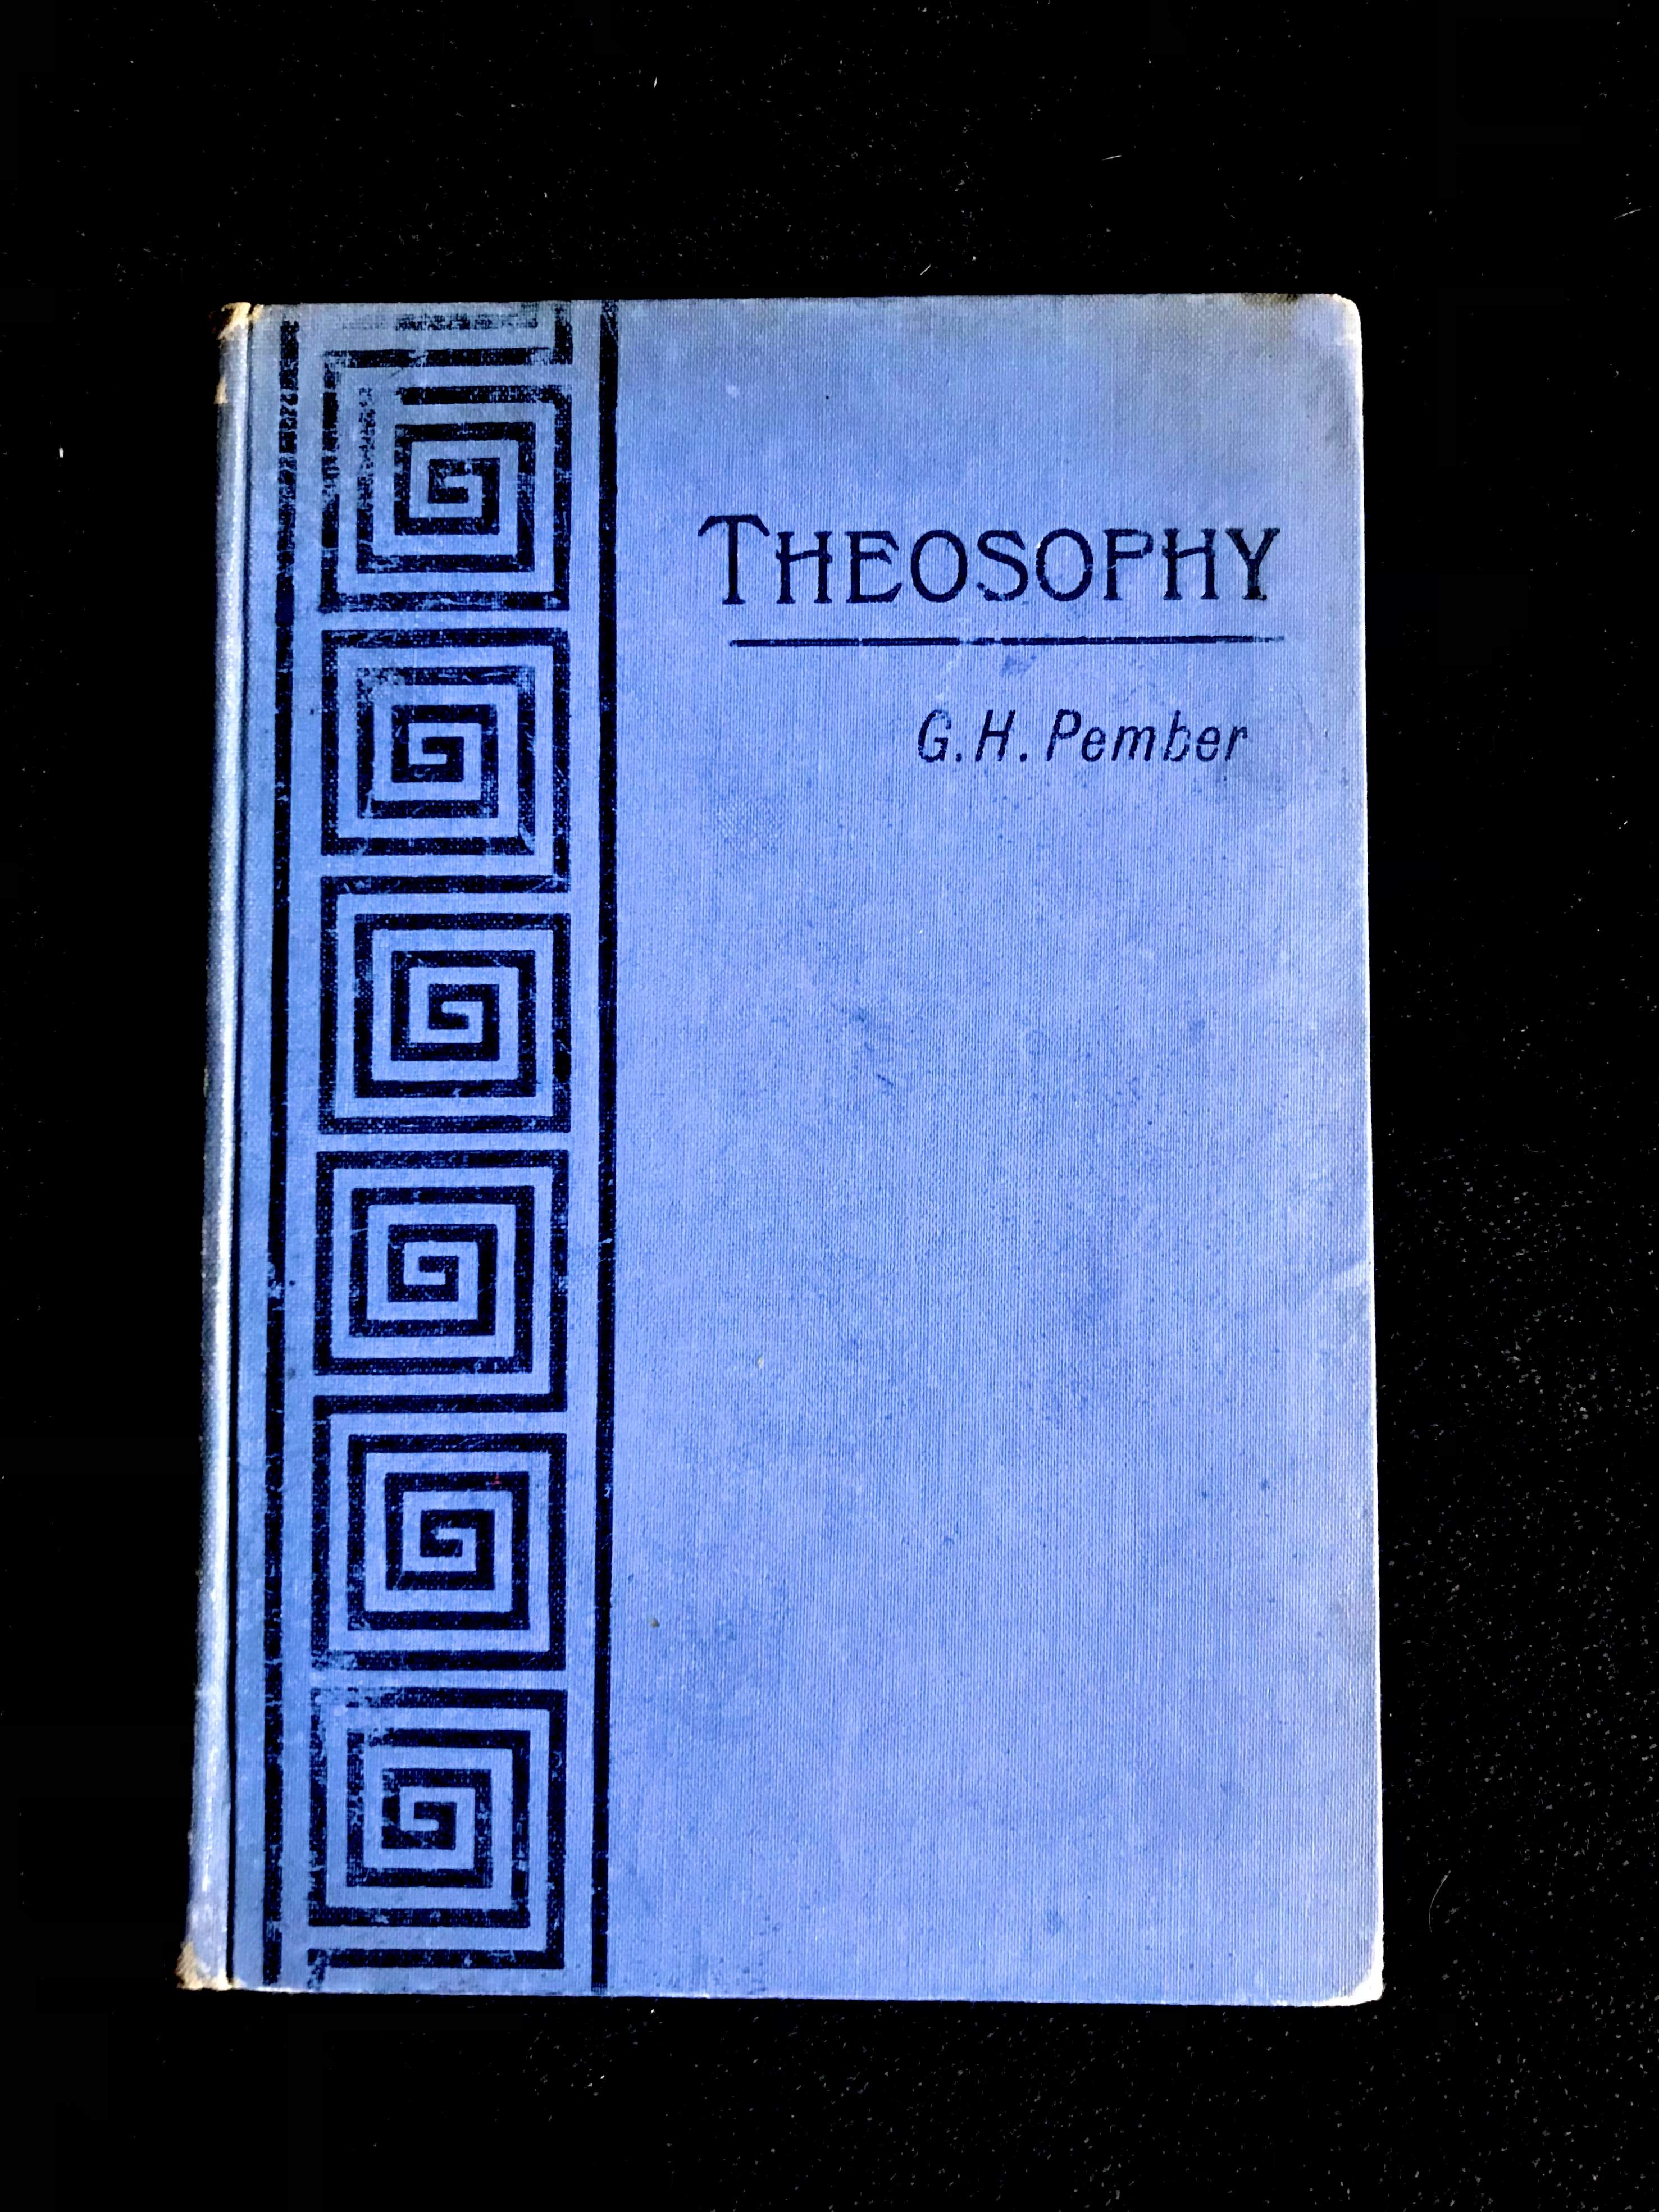 Theosophy by G. H. Pember